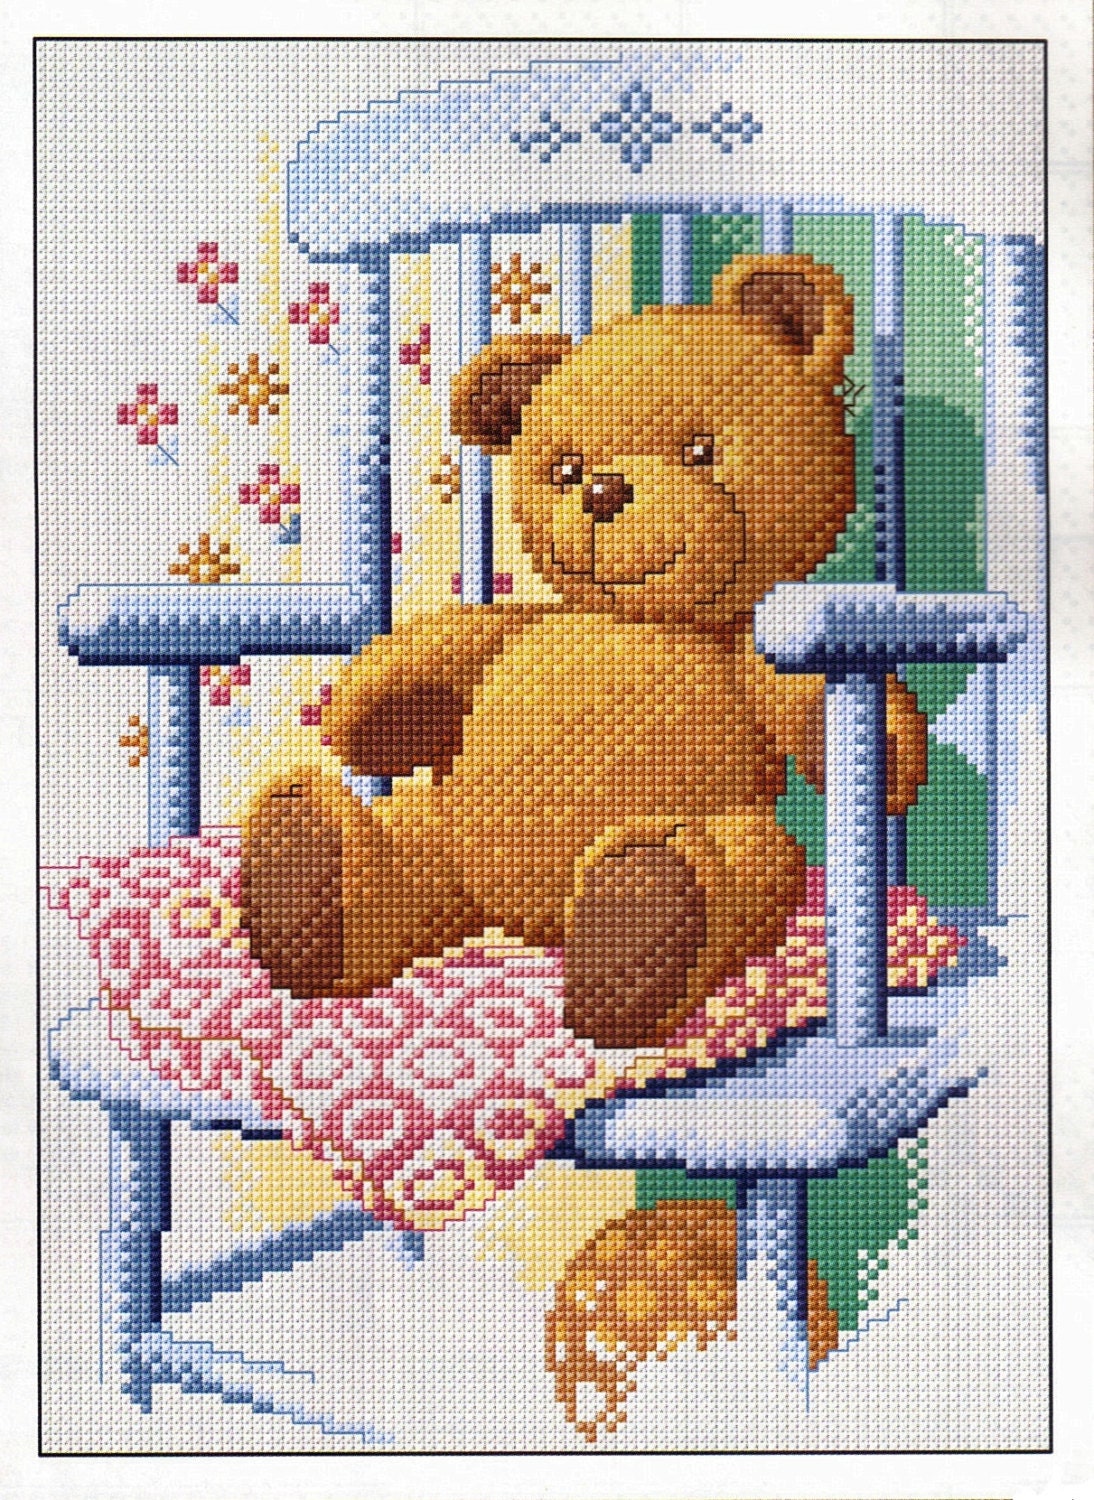 boyds-bears-cross-stitch-patterns-care-bear-cross-stitch-cross-stitch-patterns-cross